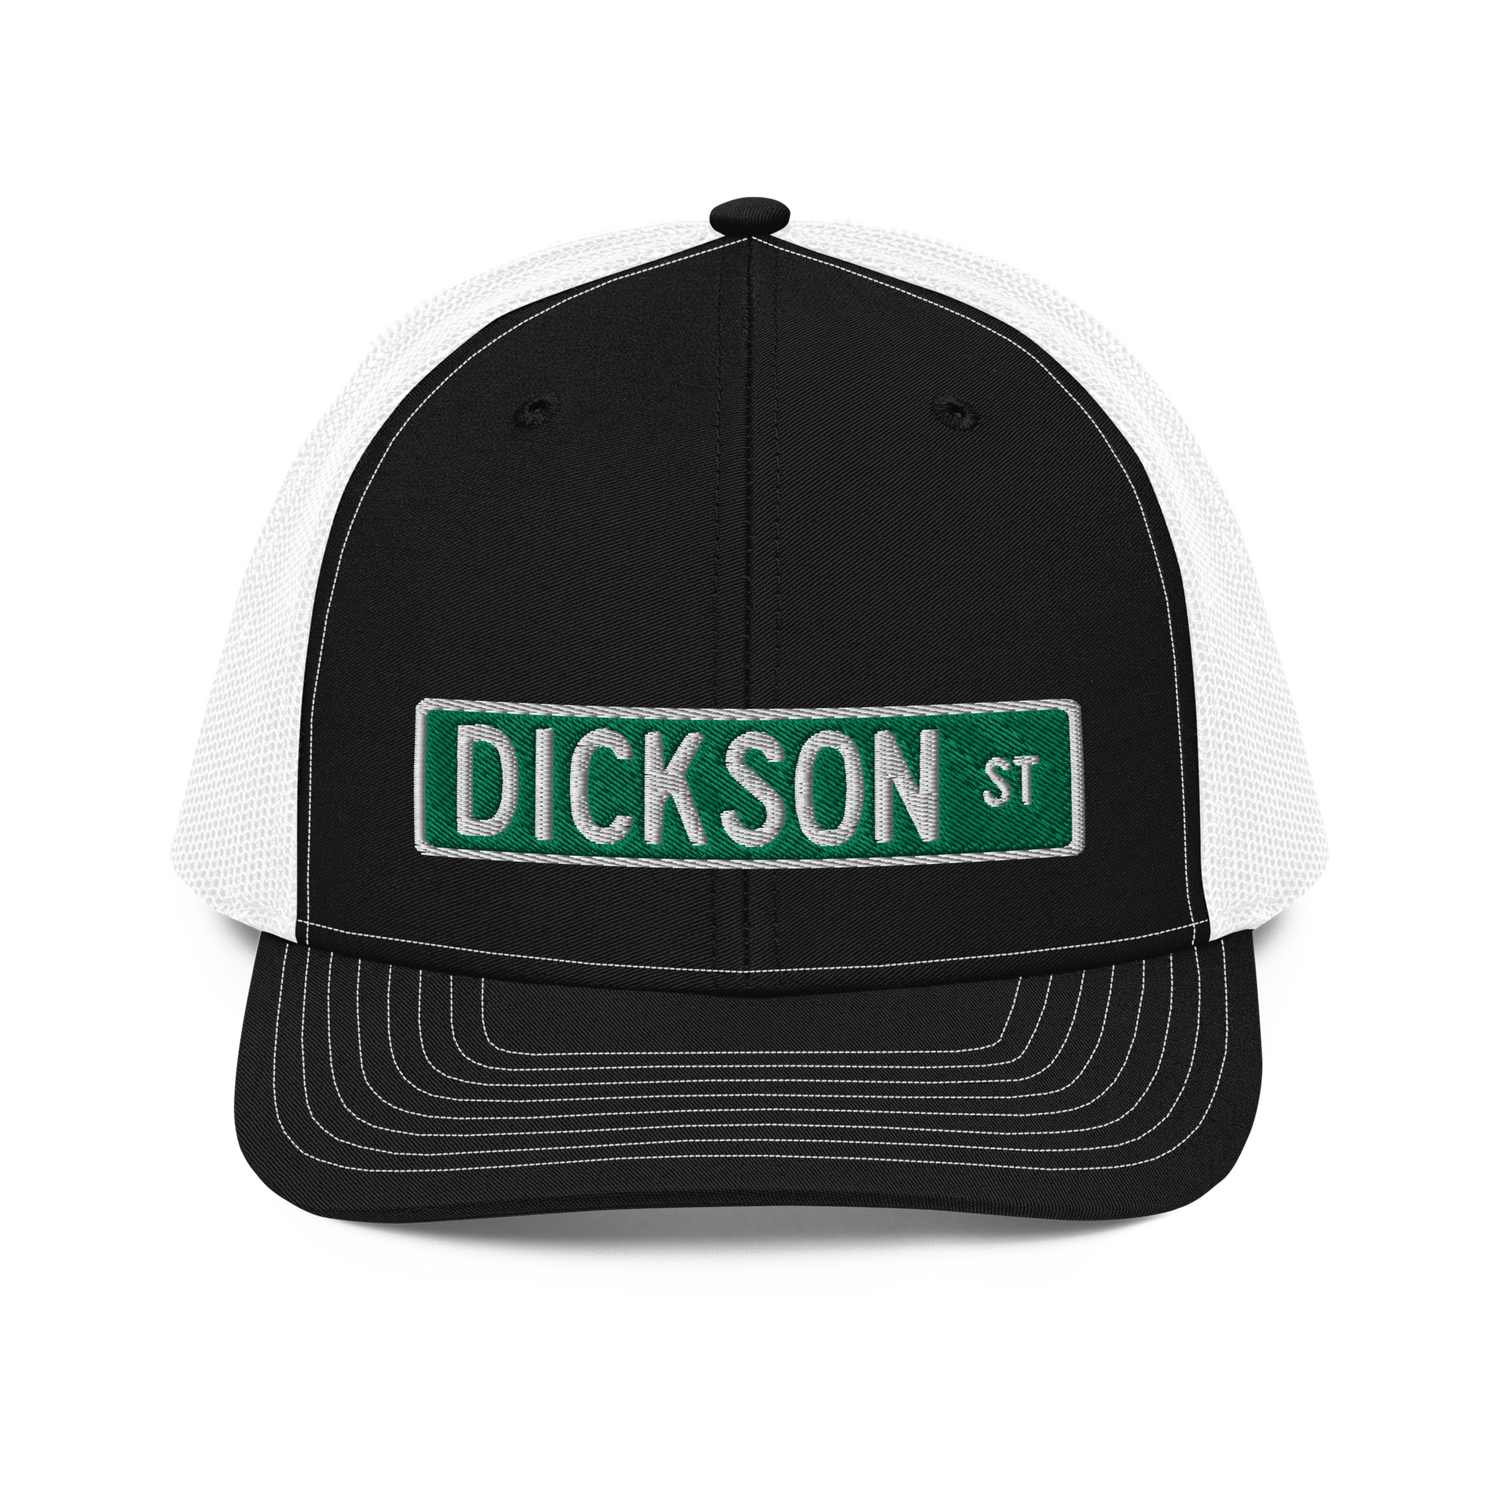 Dickson Street Sign Trucker Hat